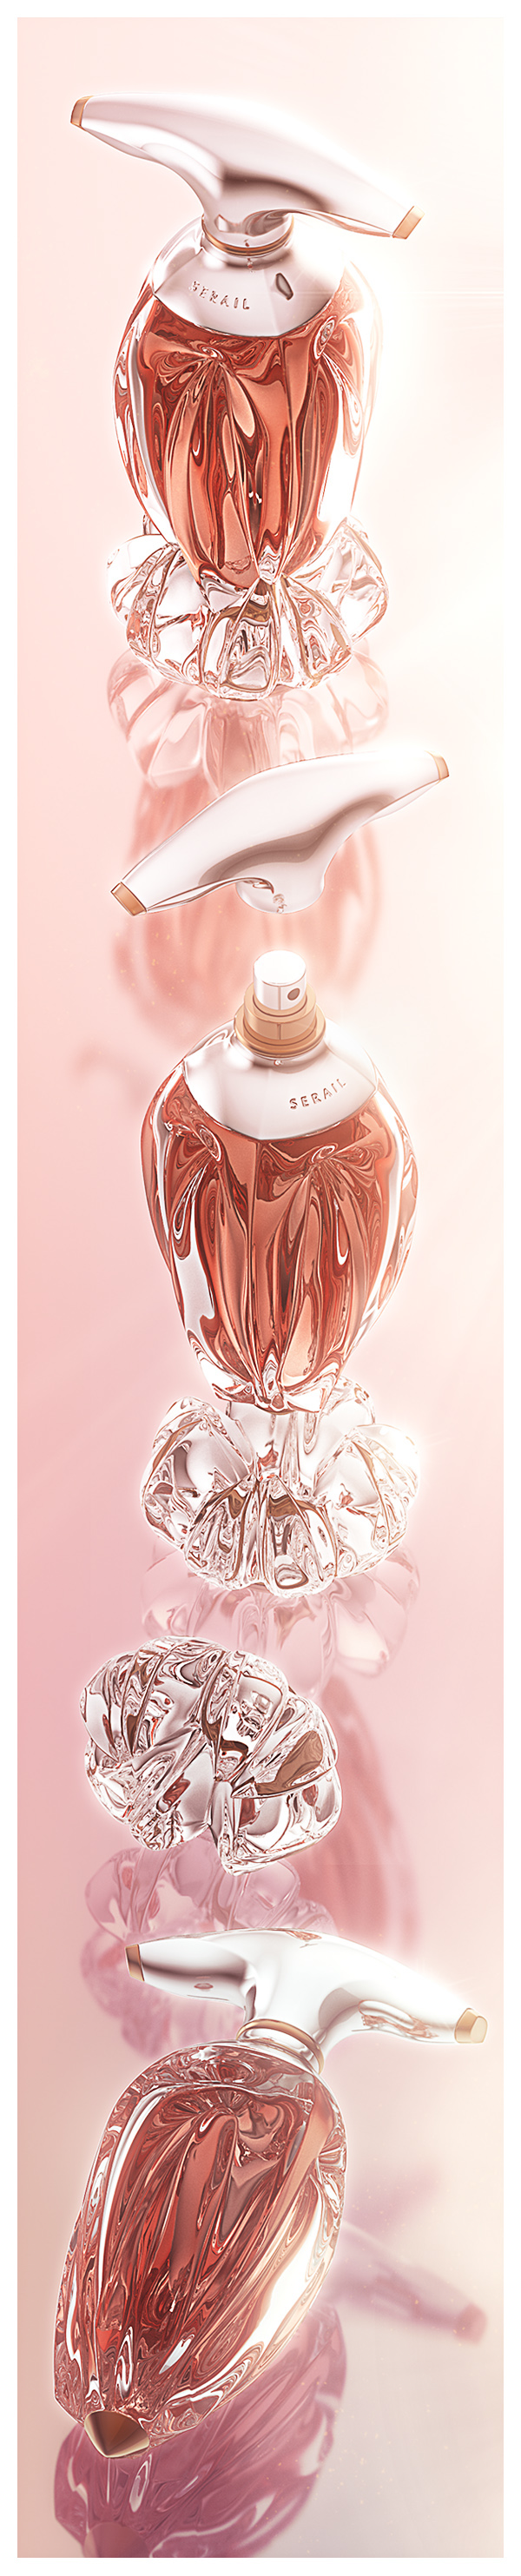 perfume vial concept glass crystal Flacon FMCG Fragrance design colors luxury bottle sculptural retouch highend